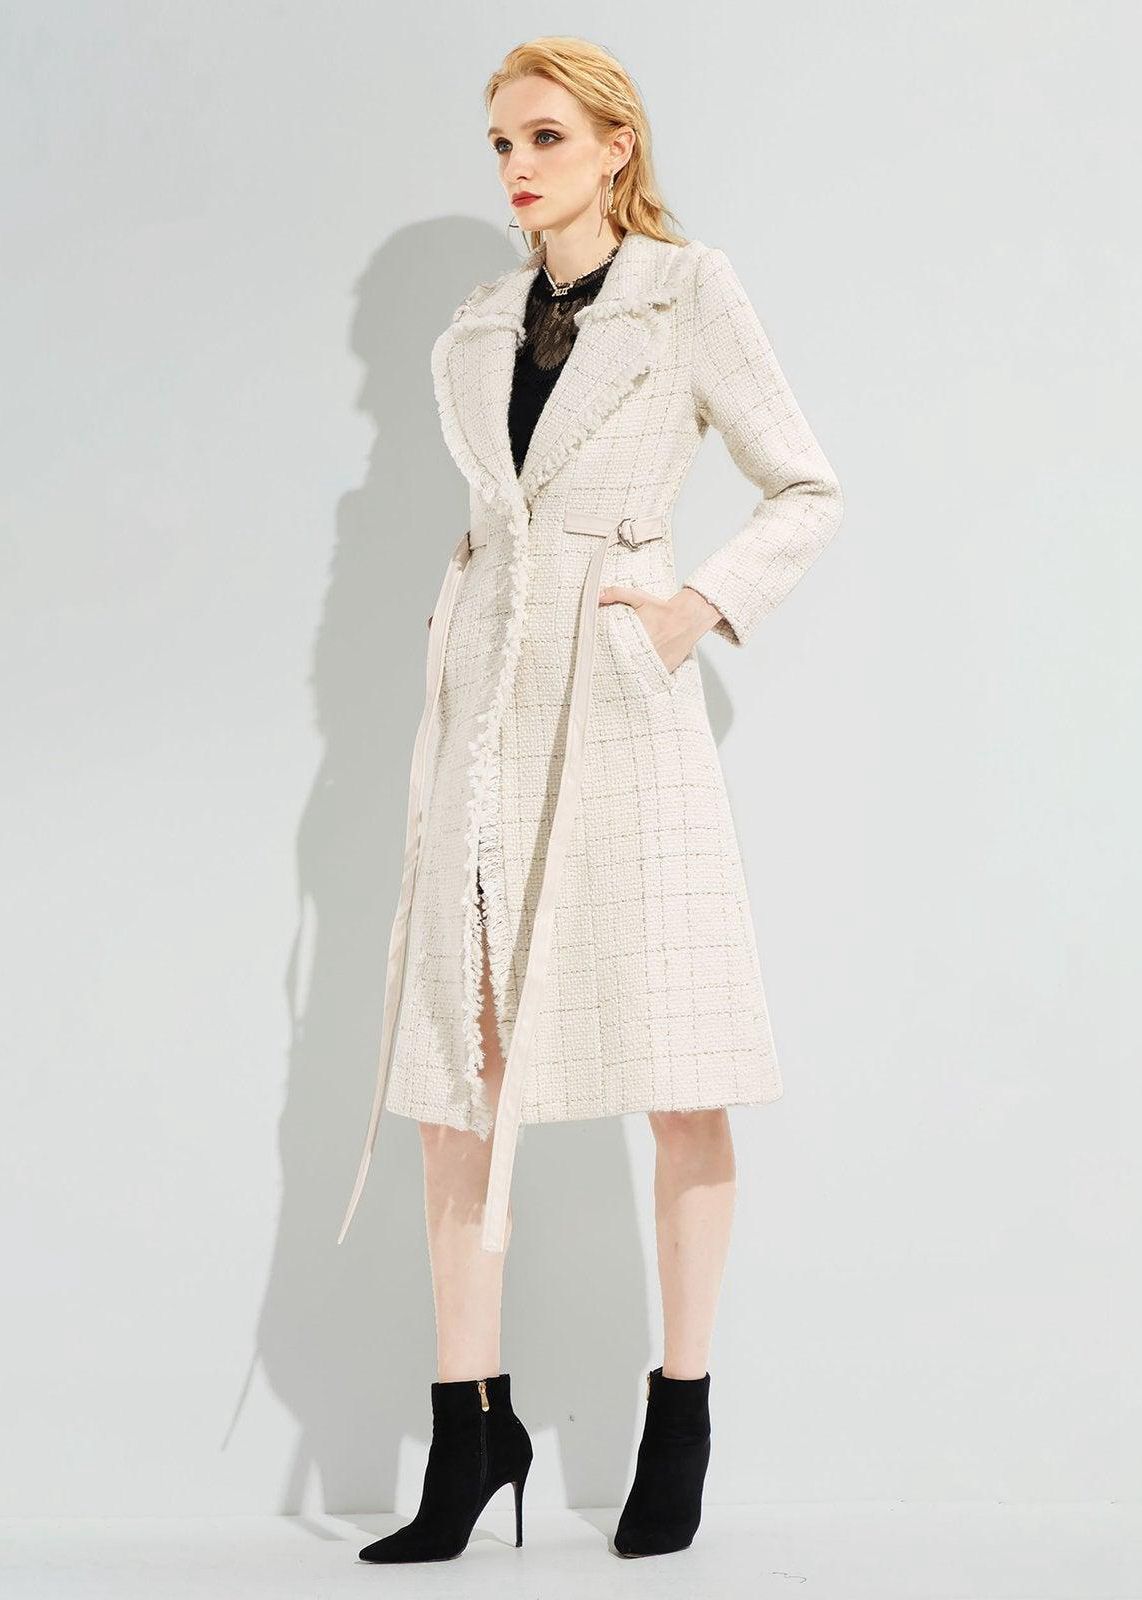 chanel style coat